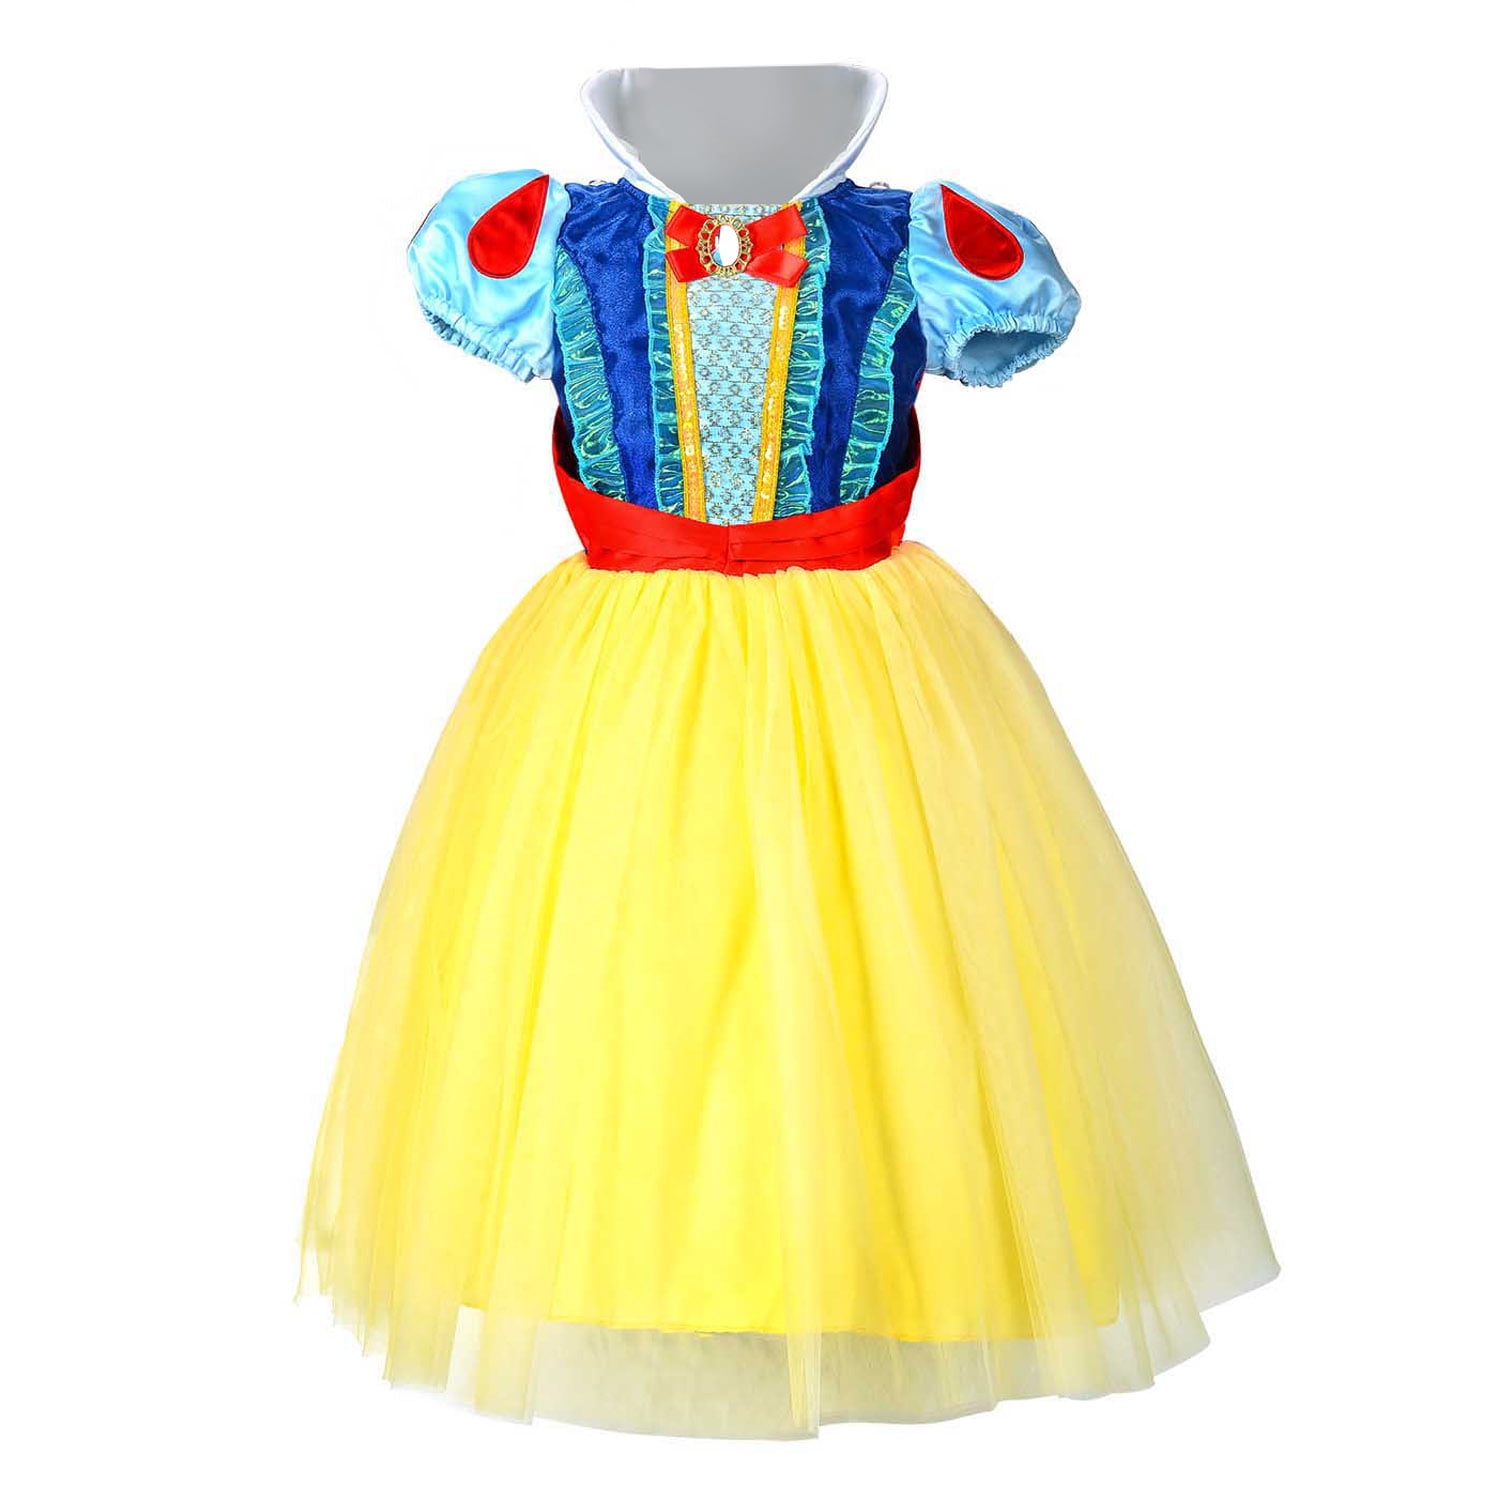 snow white birthday dress